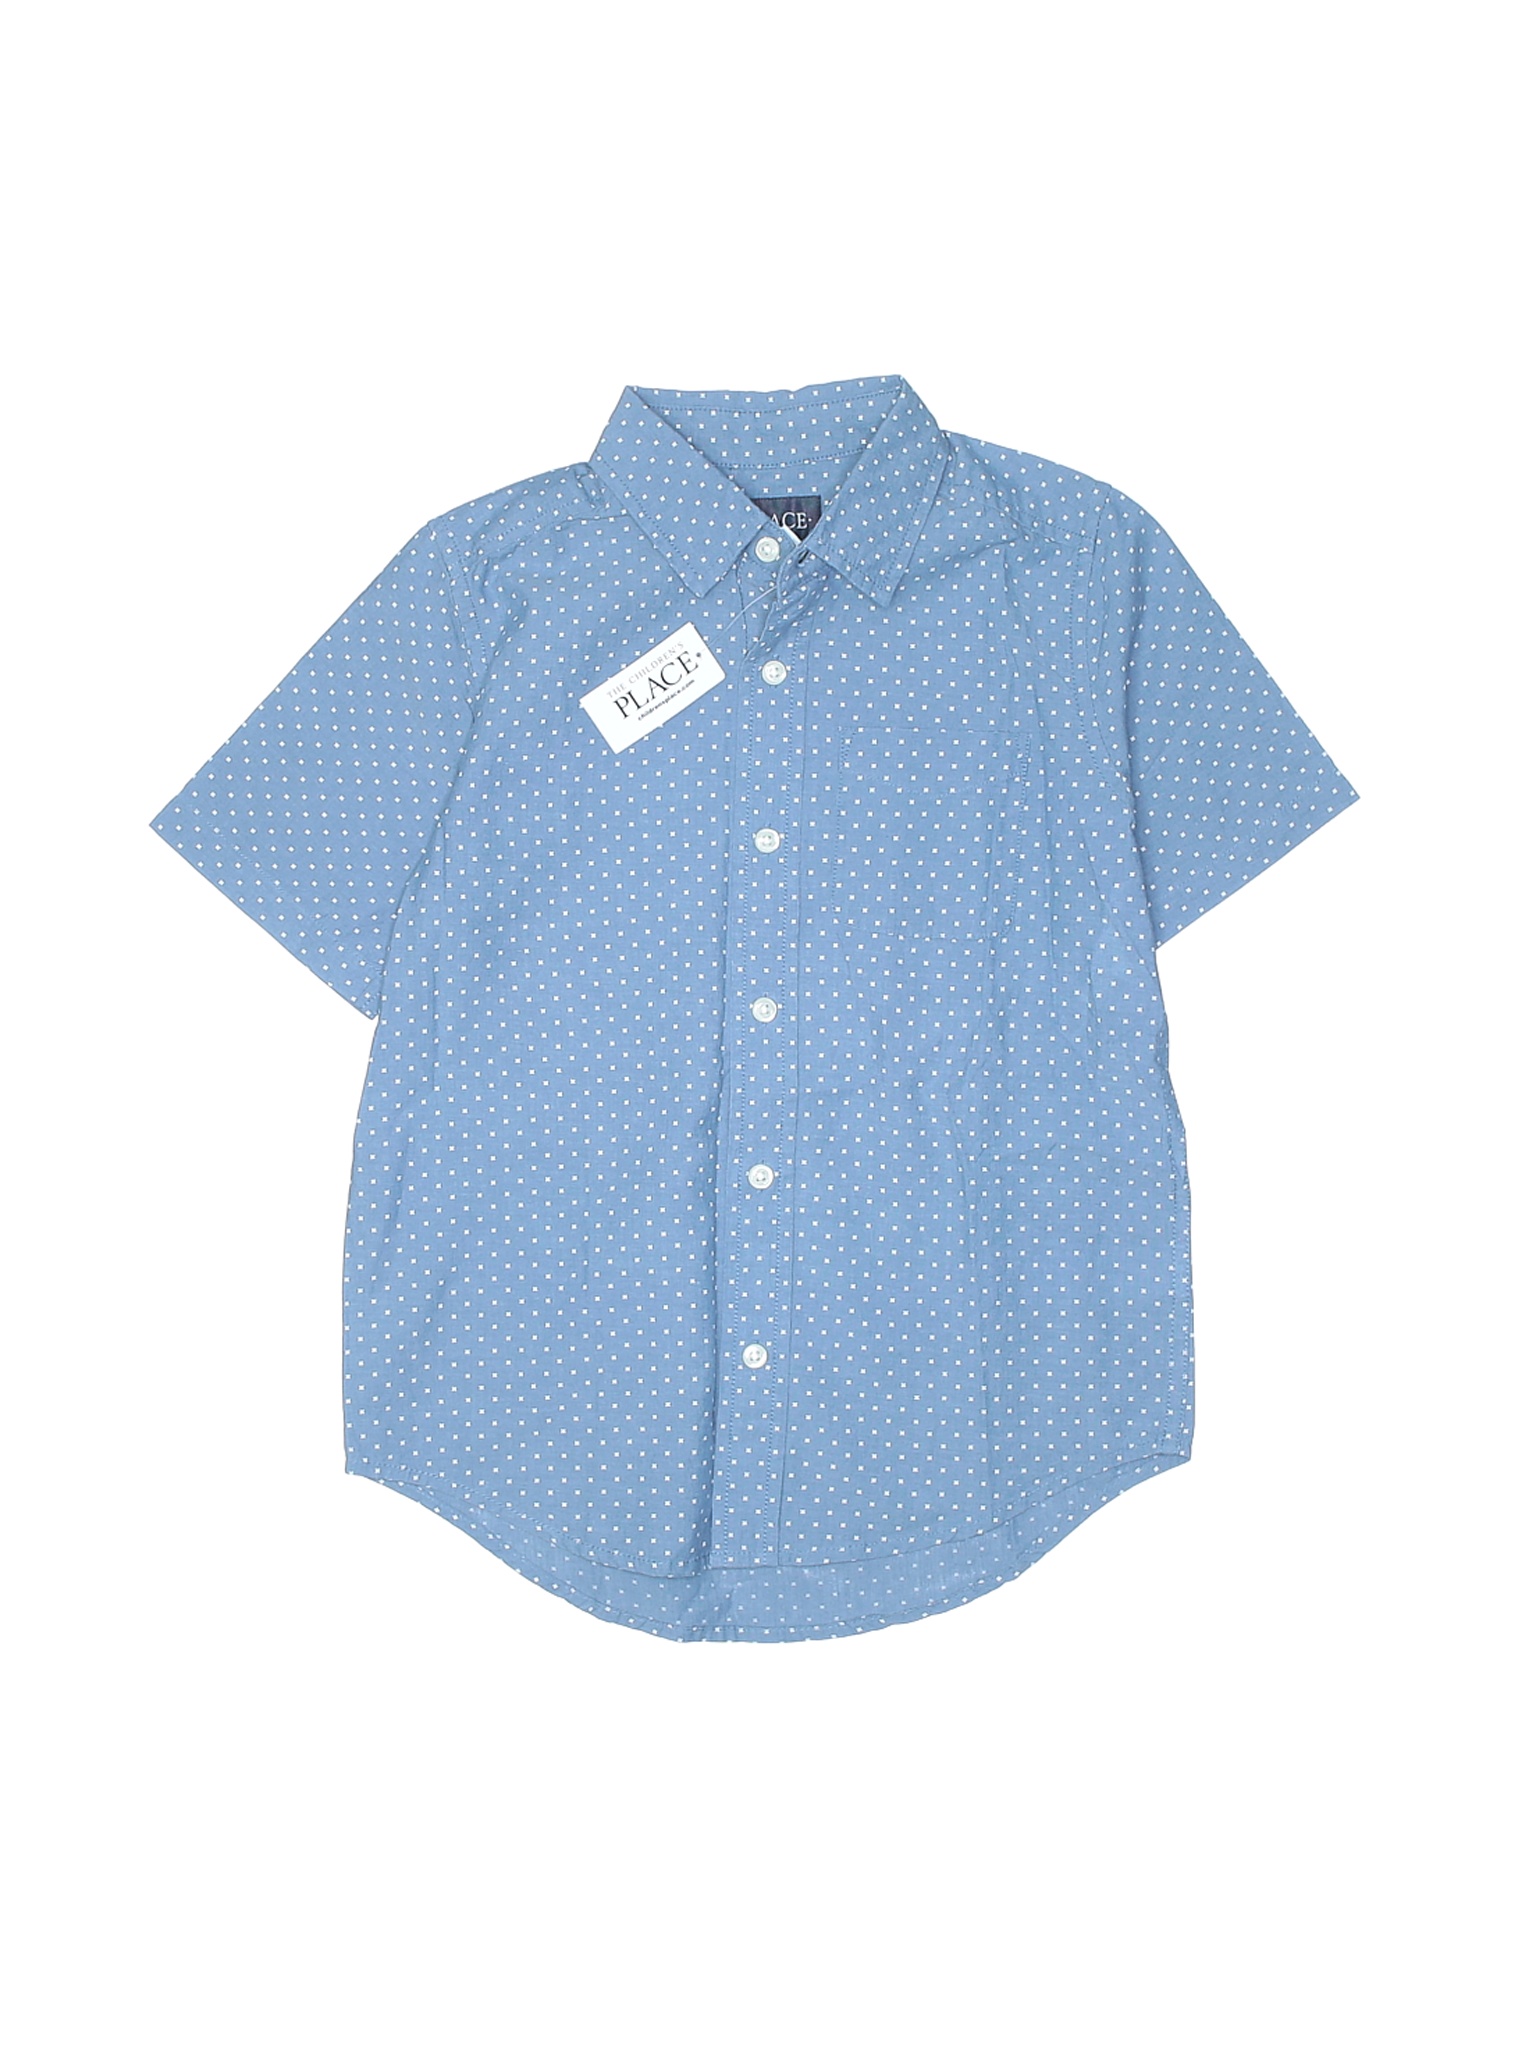 NWT The Children's Place Boys Blue Short Sleeve Button-Down Shirt 8 | eBay